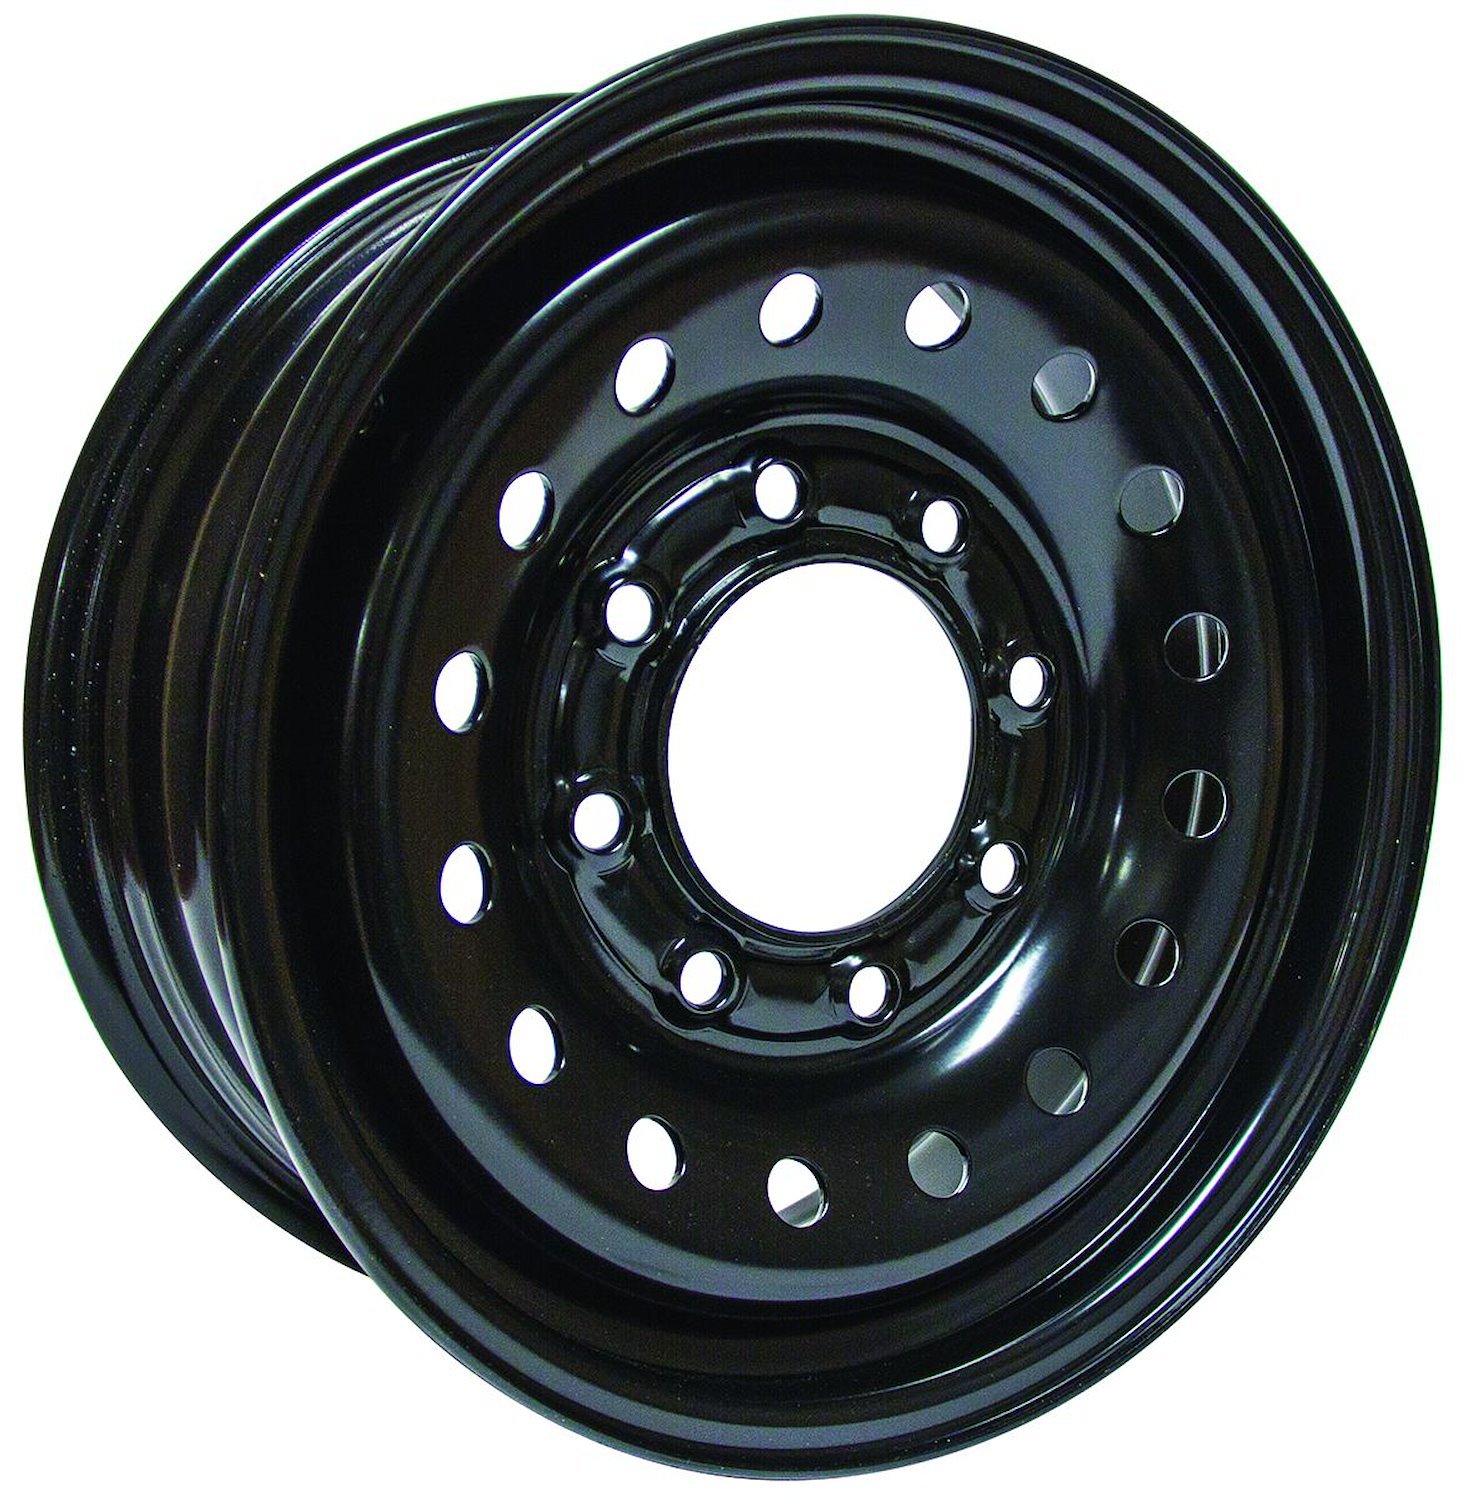 X46865 Steel Wheel [Size: 16" x 6.50"] Black Finish